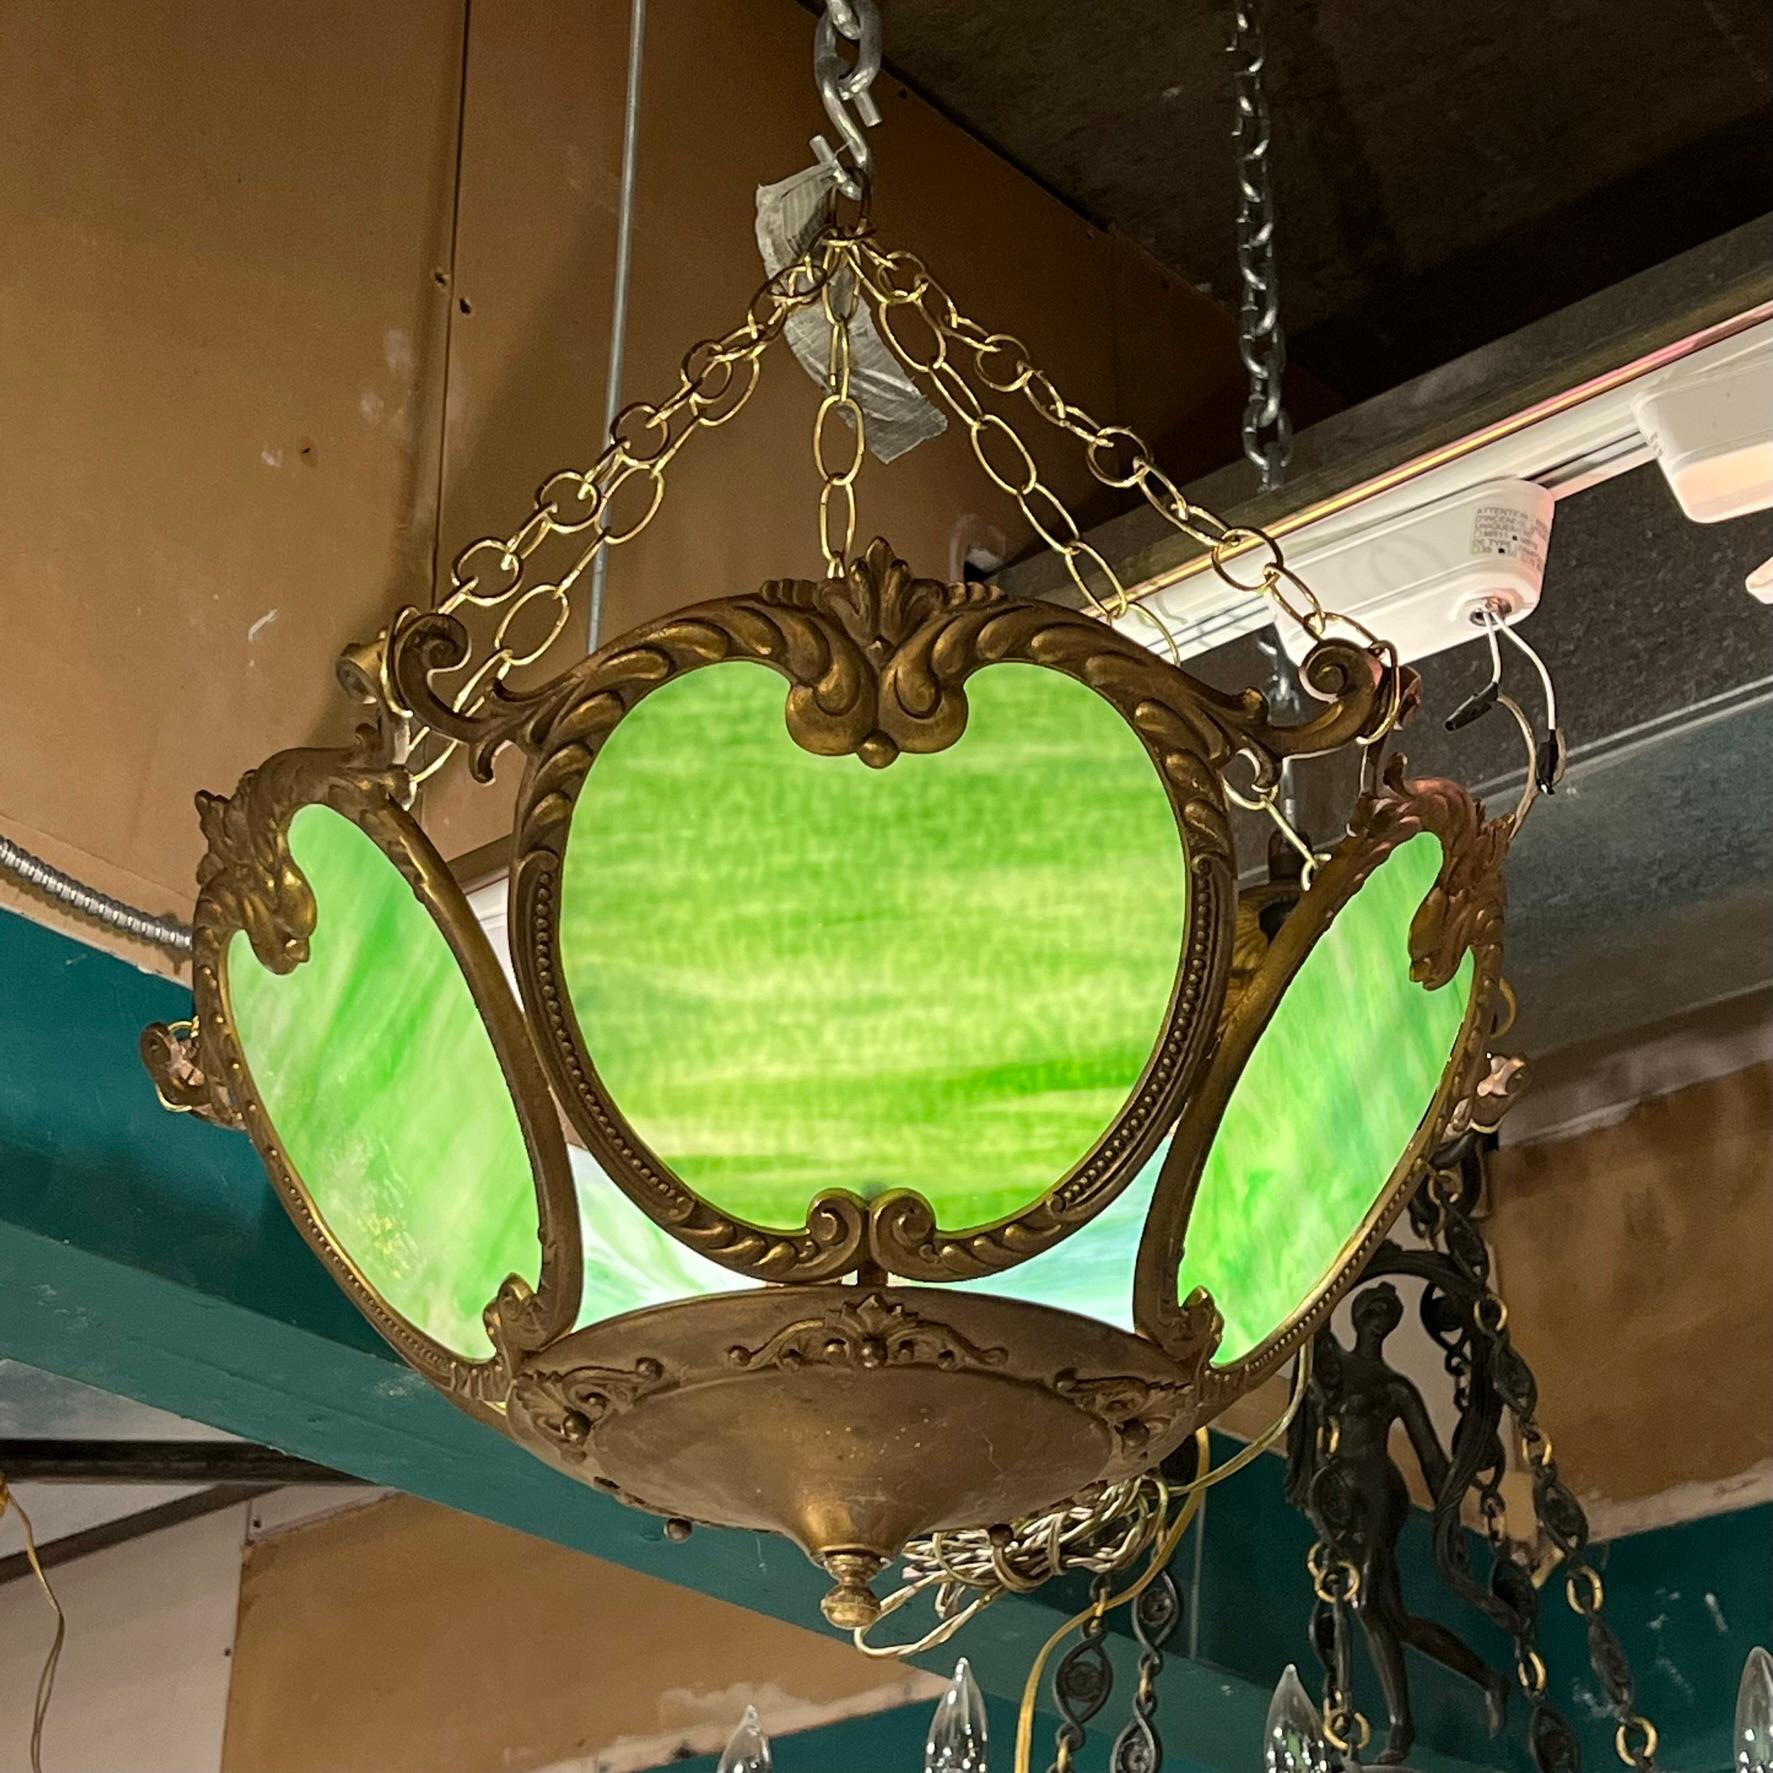 vintage green glass chandelier